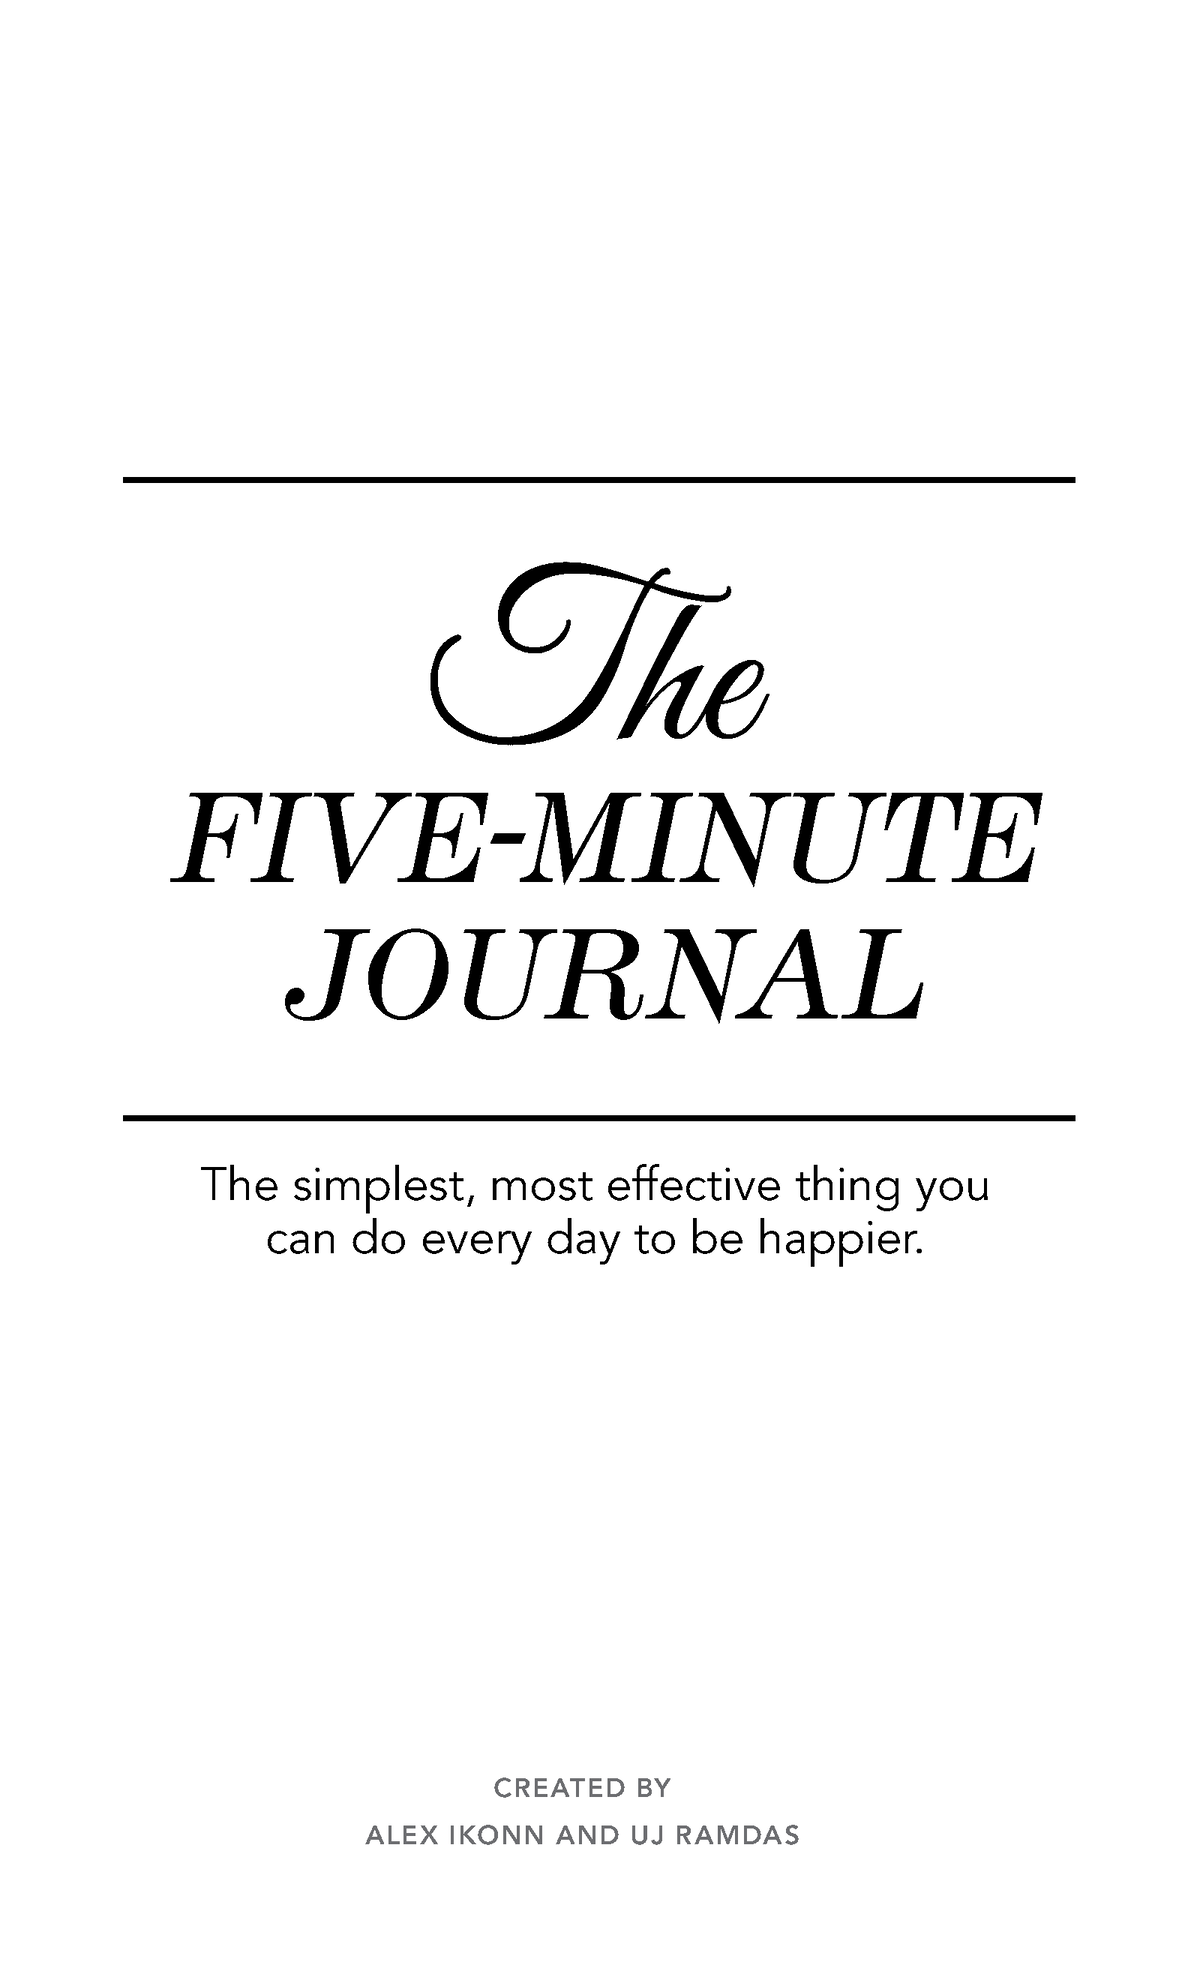 Five Minute Journal Quickstart - CREATED BY ALEX IKONN AND UJ R AMDAS The  FIVE-MINUTE JOURNAL The - Studocu